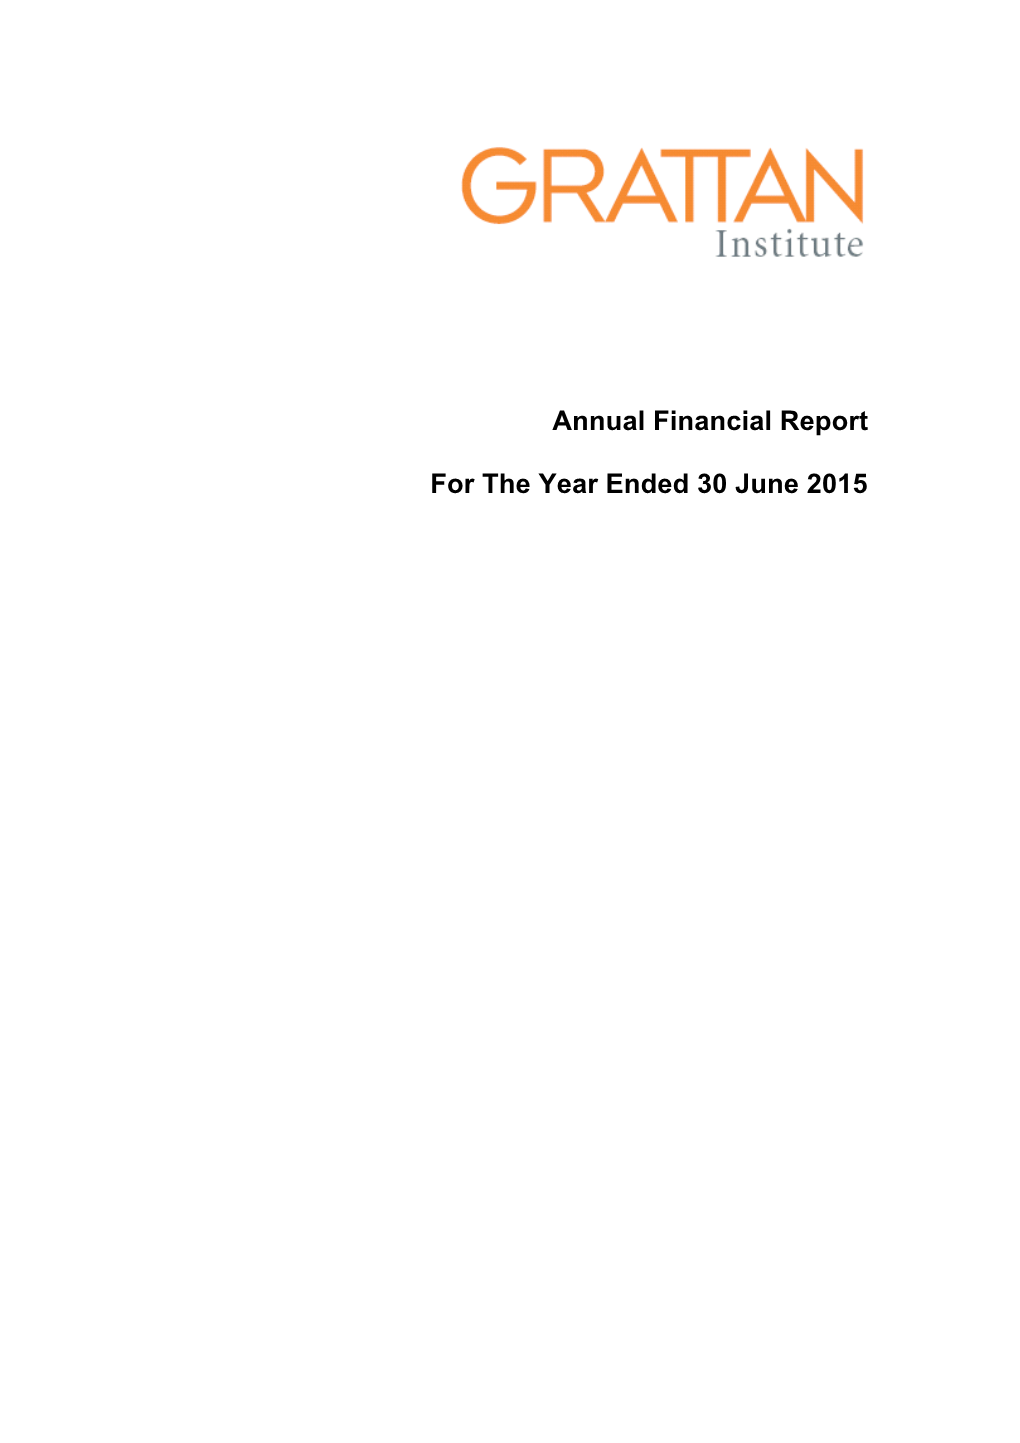 Grattan Institute Annual Financial Report 2015